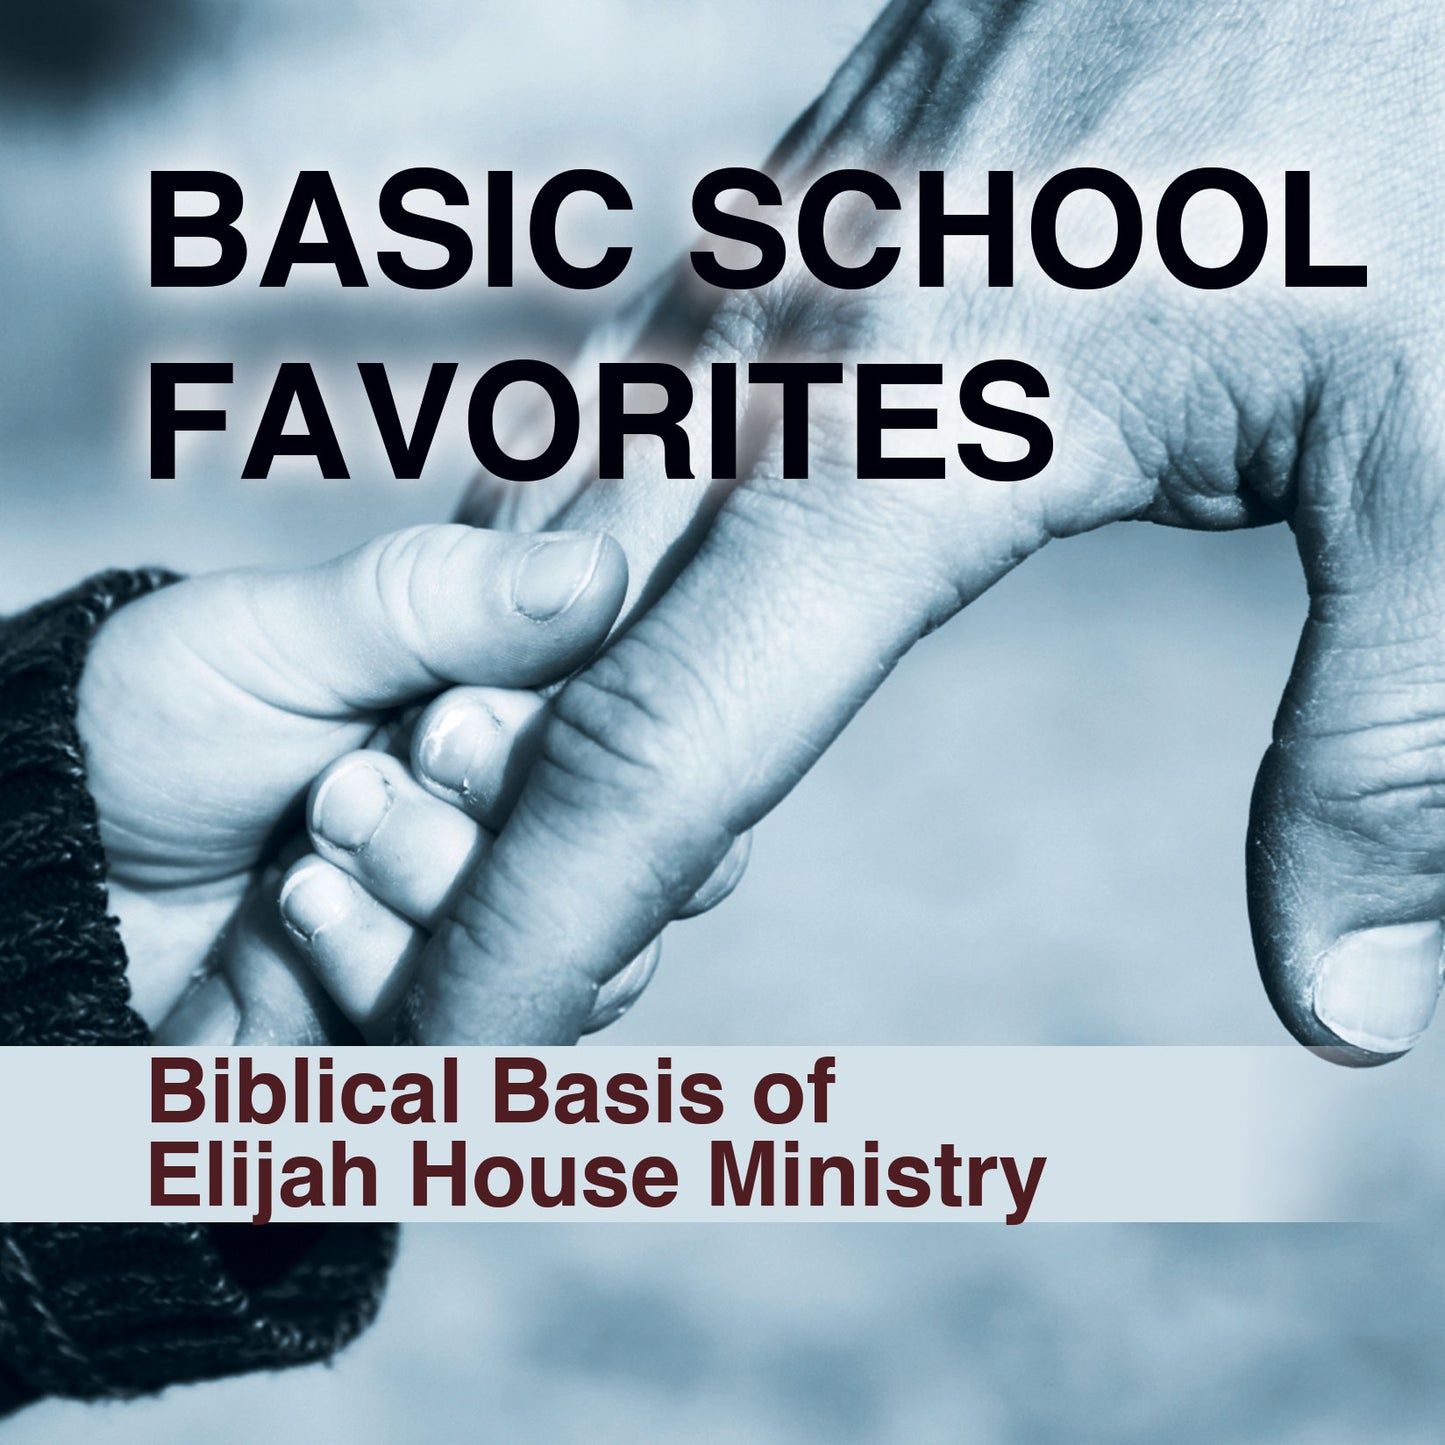 Biblical Basis of Elijah House Ministry (Basic School Favorites Collection One) - DVD